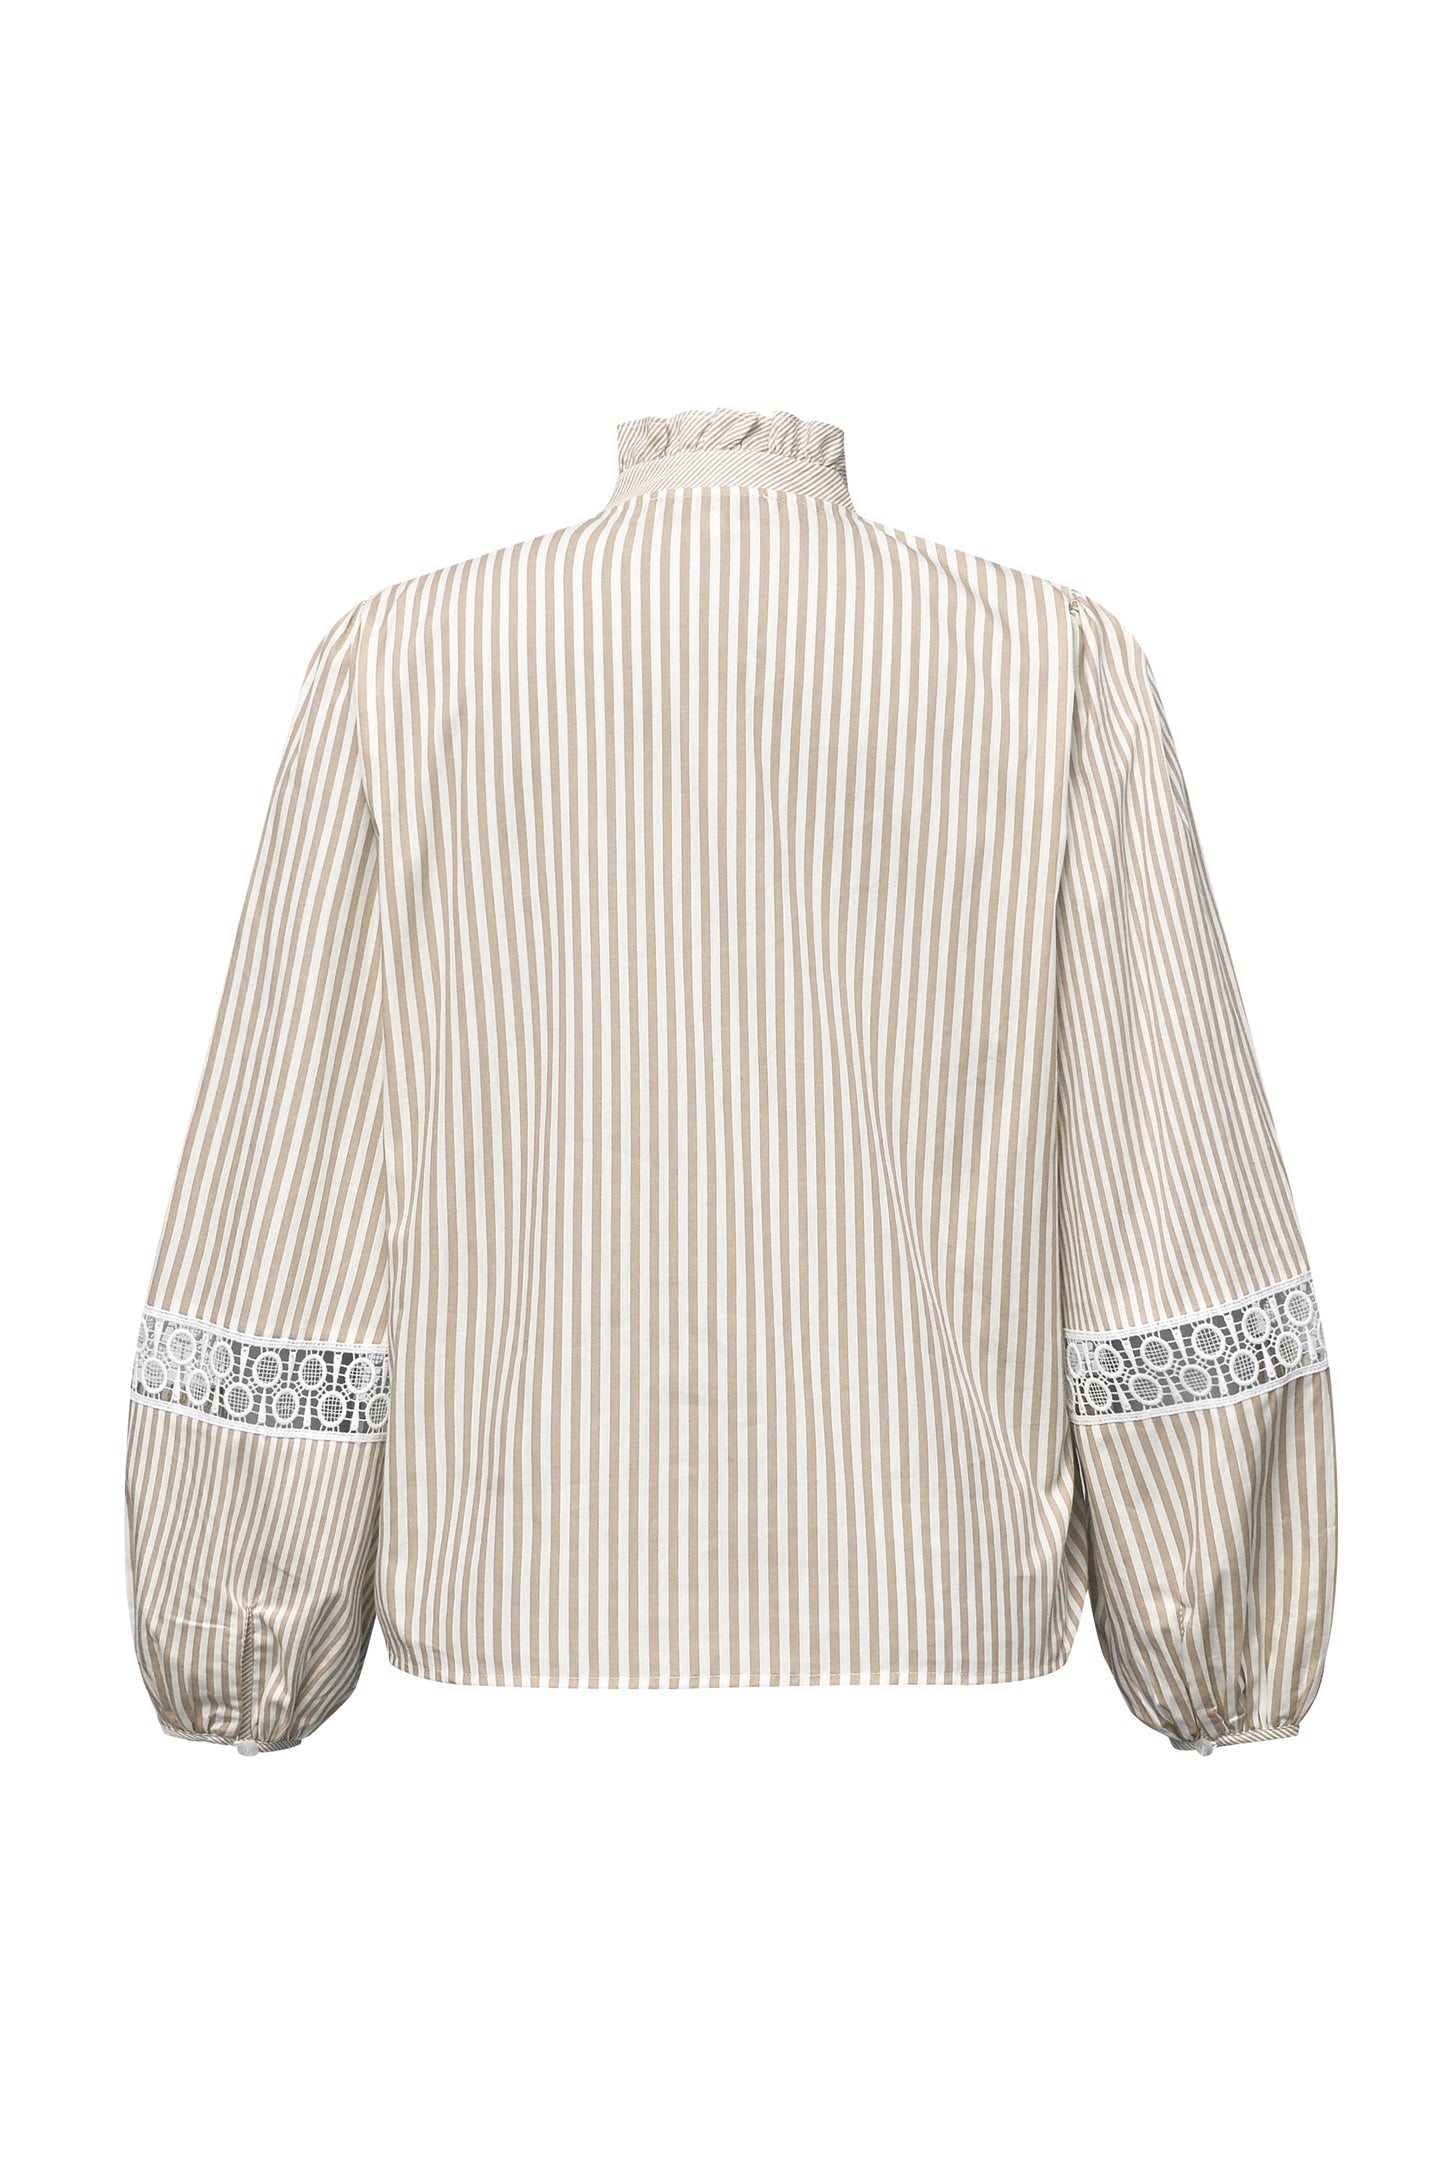 A-VIEW - Tiffany stripe shirt - Sand